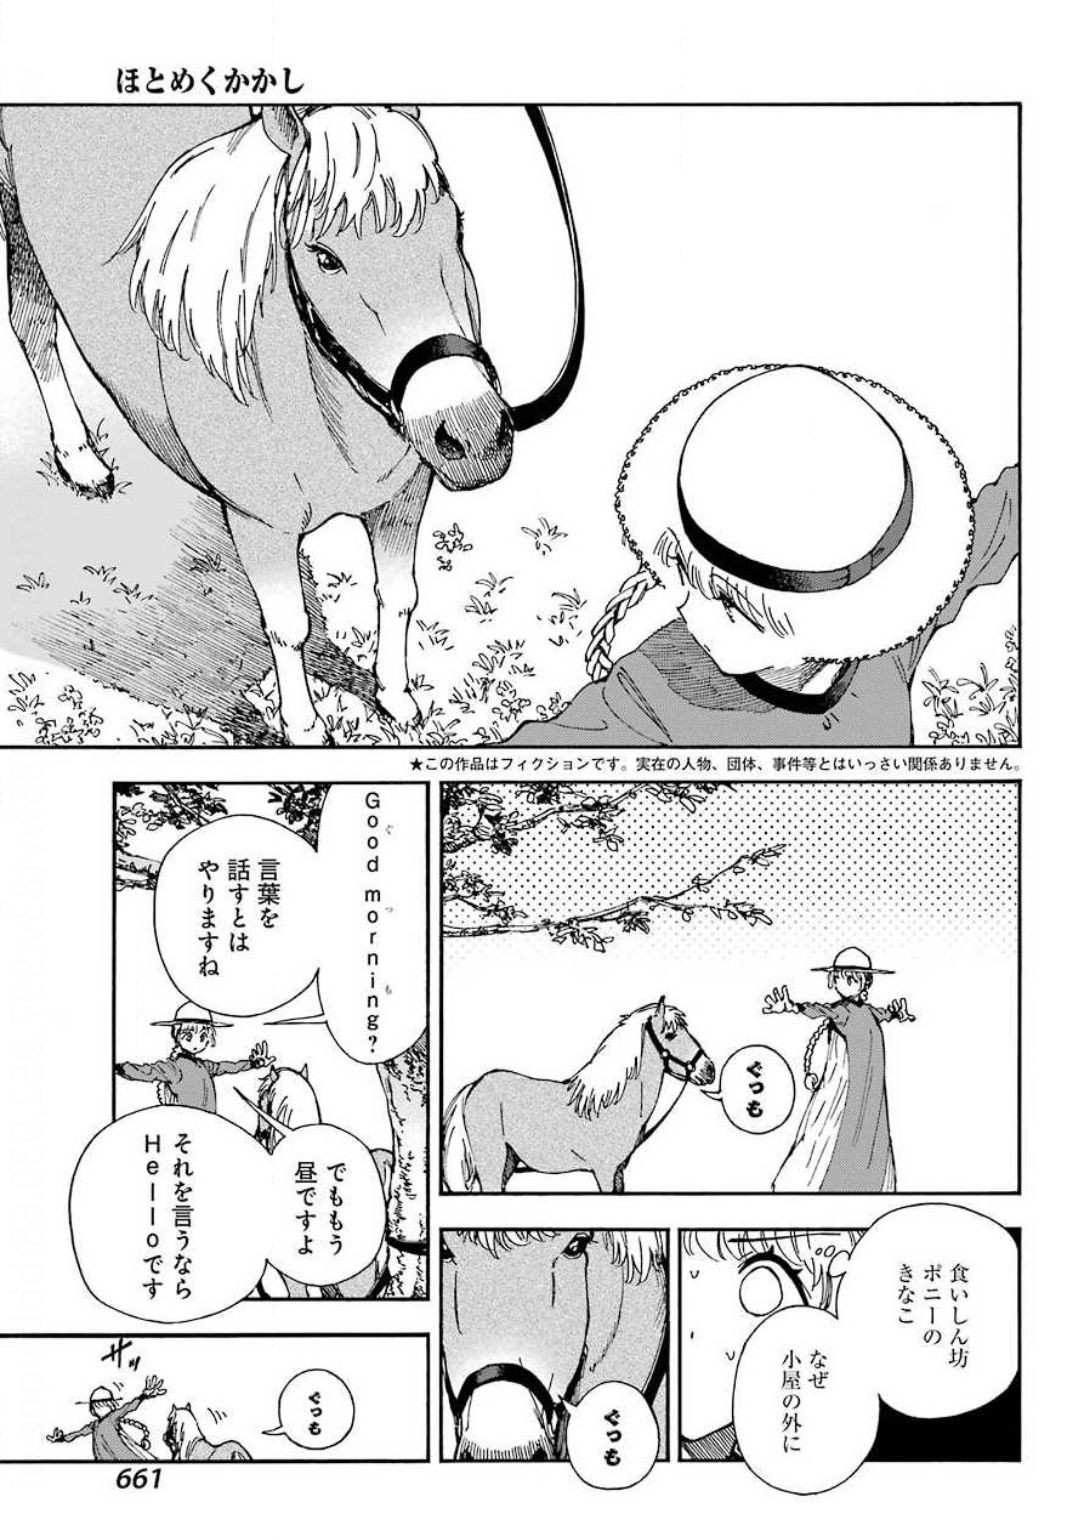 Hotomeku-kakashi - Chapter 04-2 - Page 2